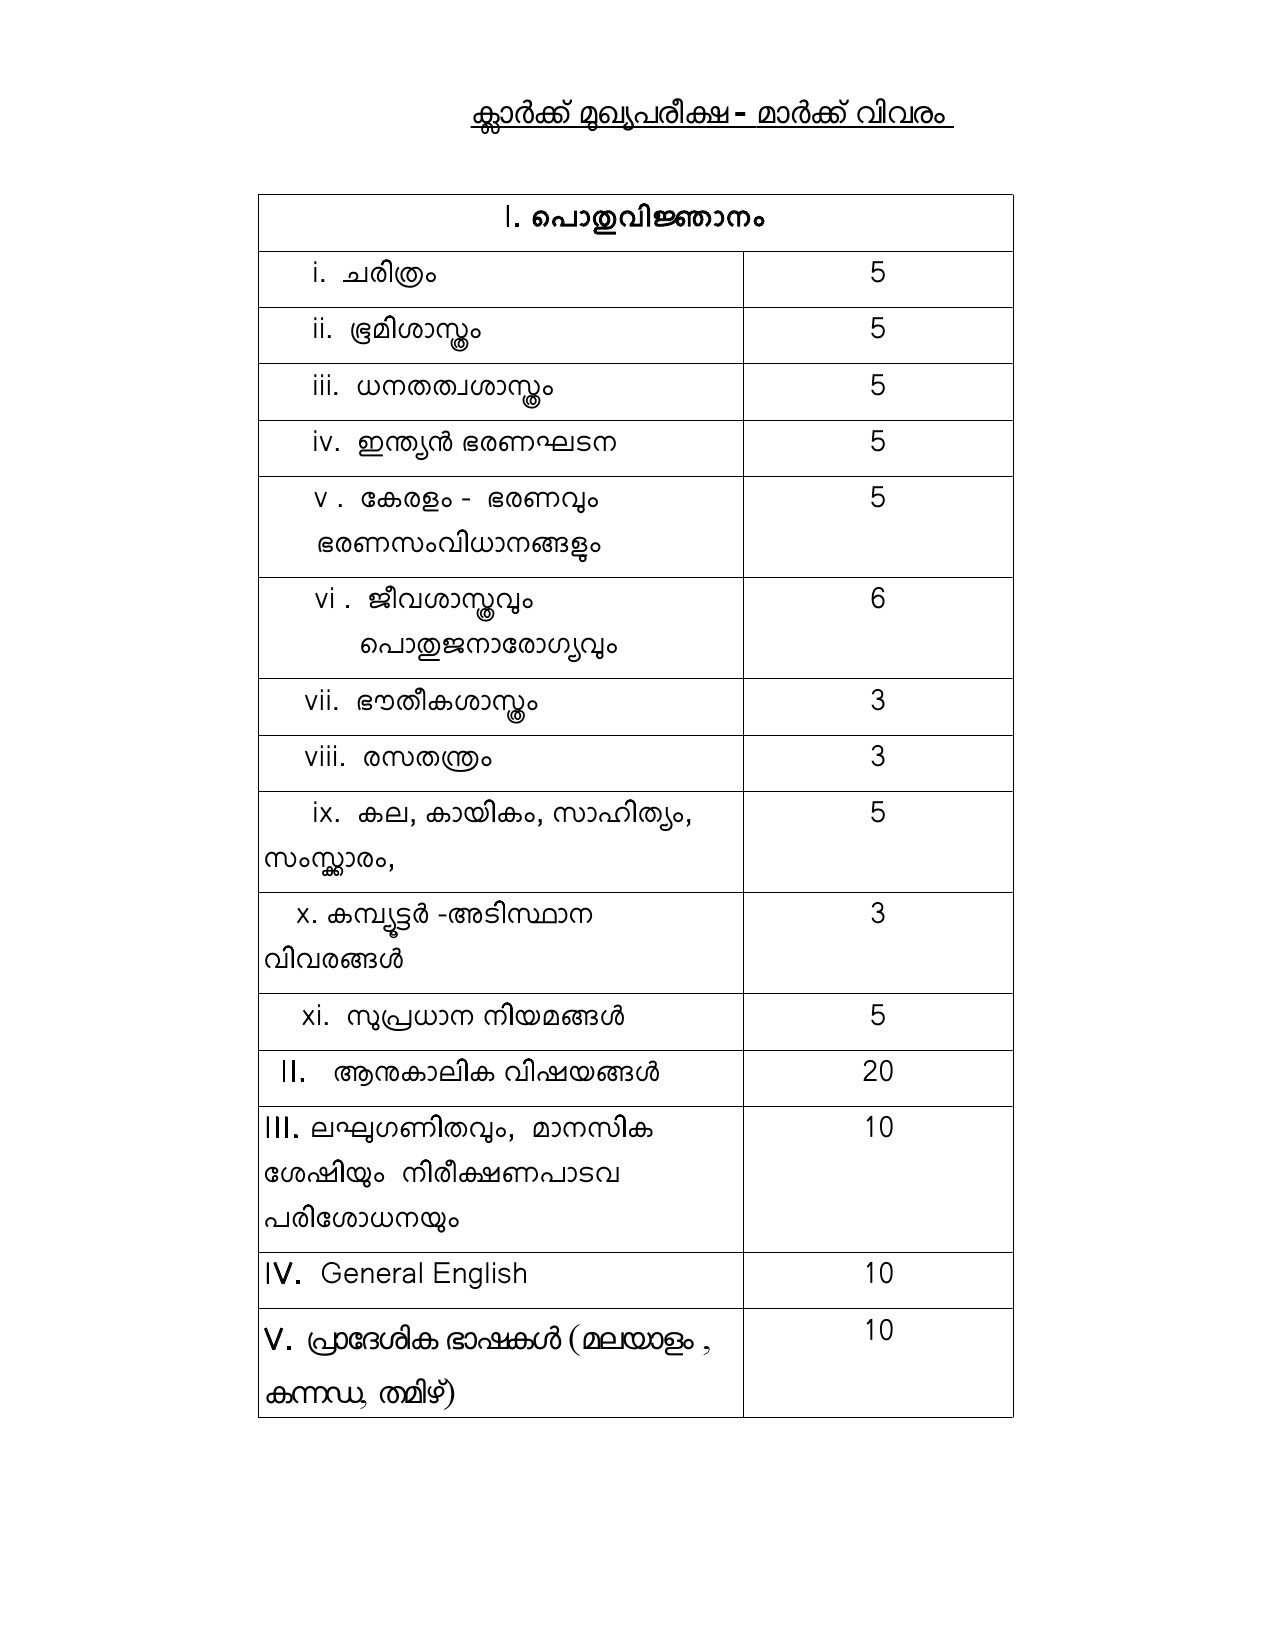 LDC Main Exam Syllabus Malayalam And English - Notification Image 1